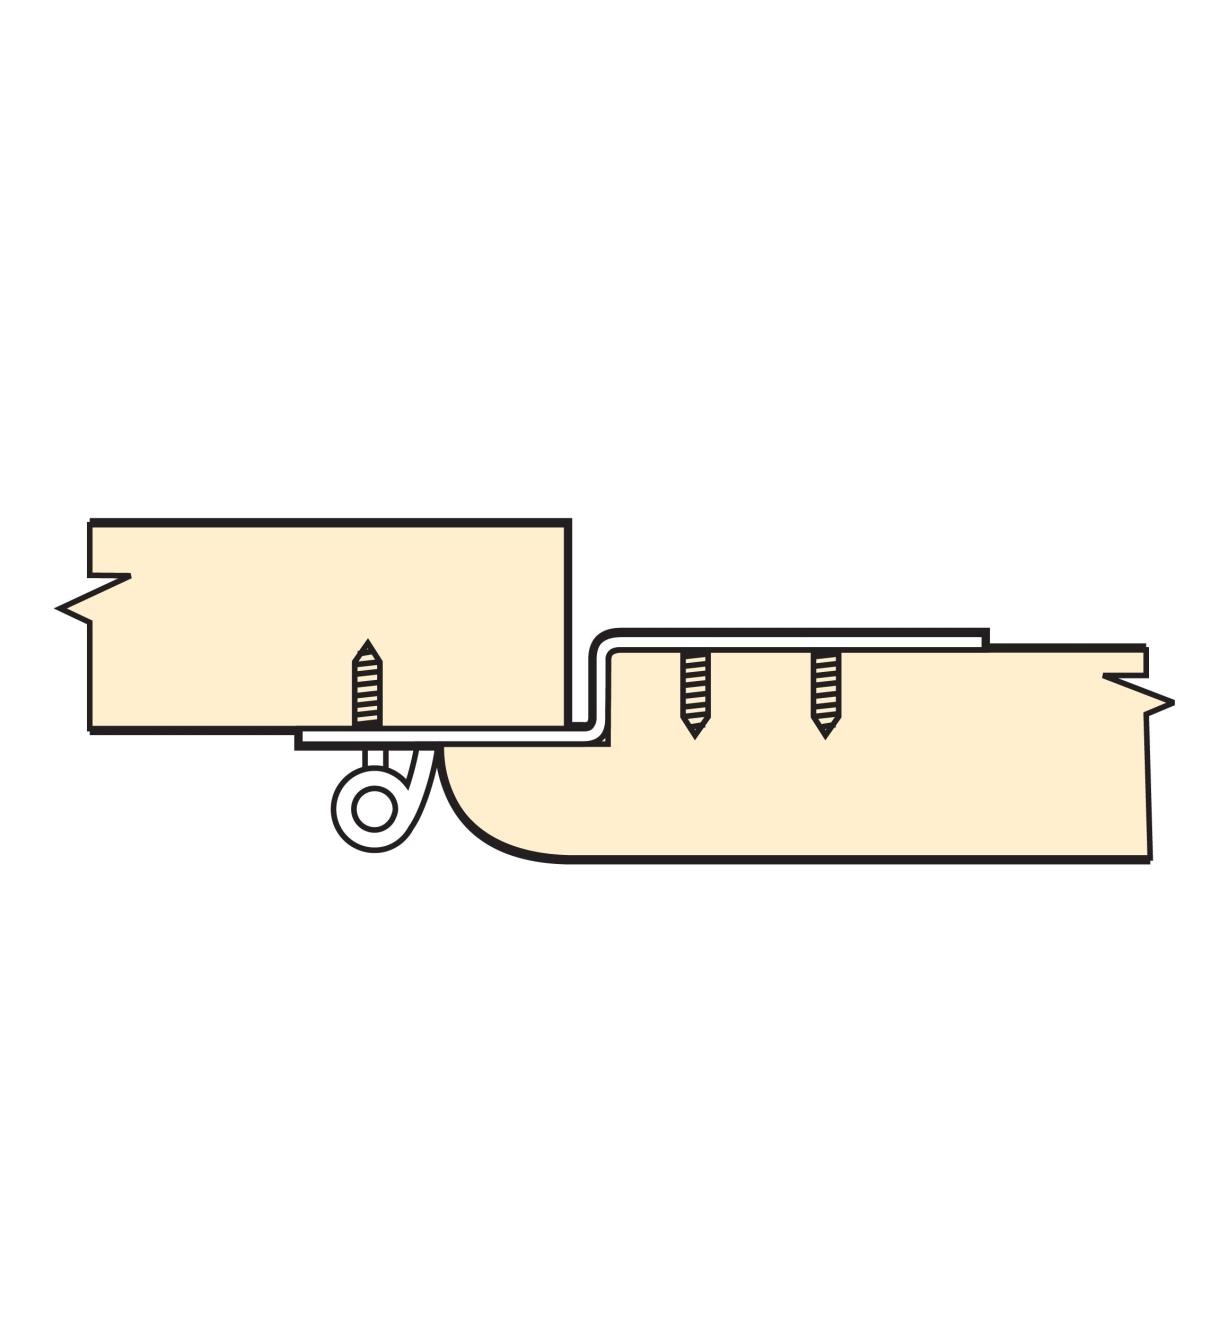 Cutaway diagram of installed inset overlay semi-concealed hinge